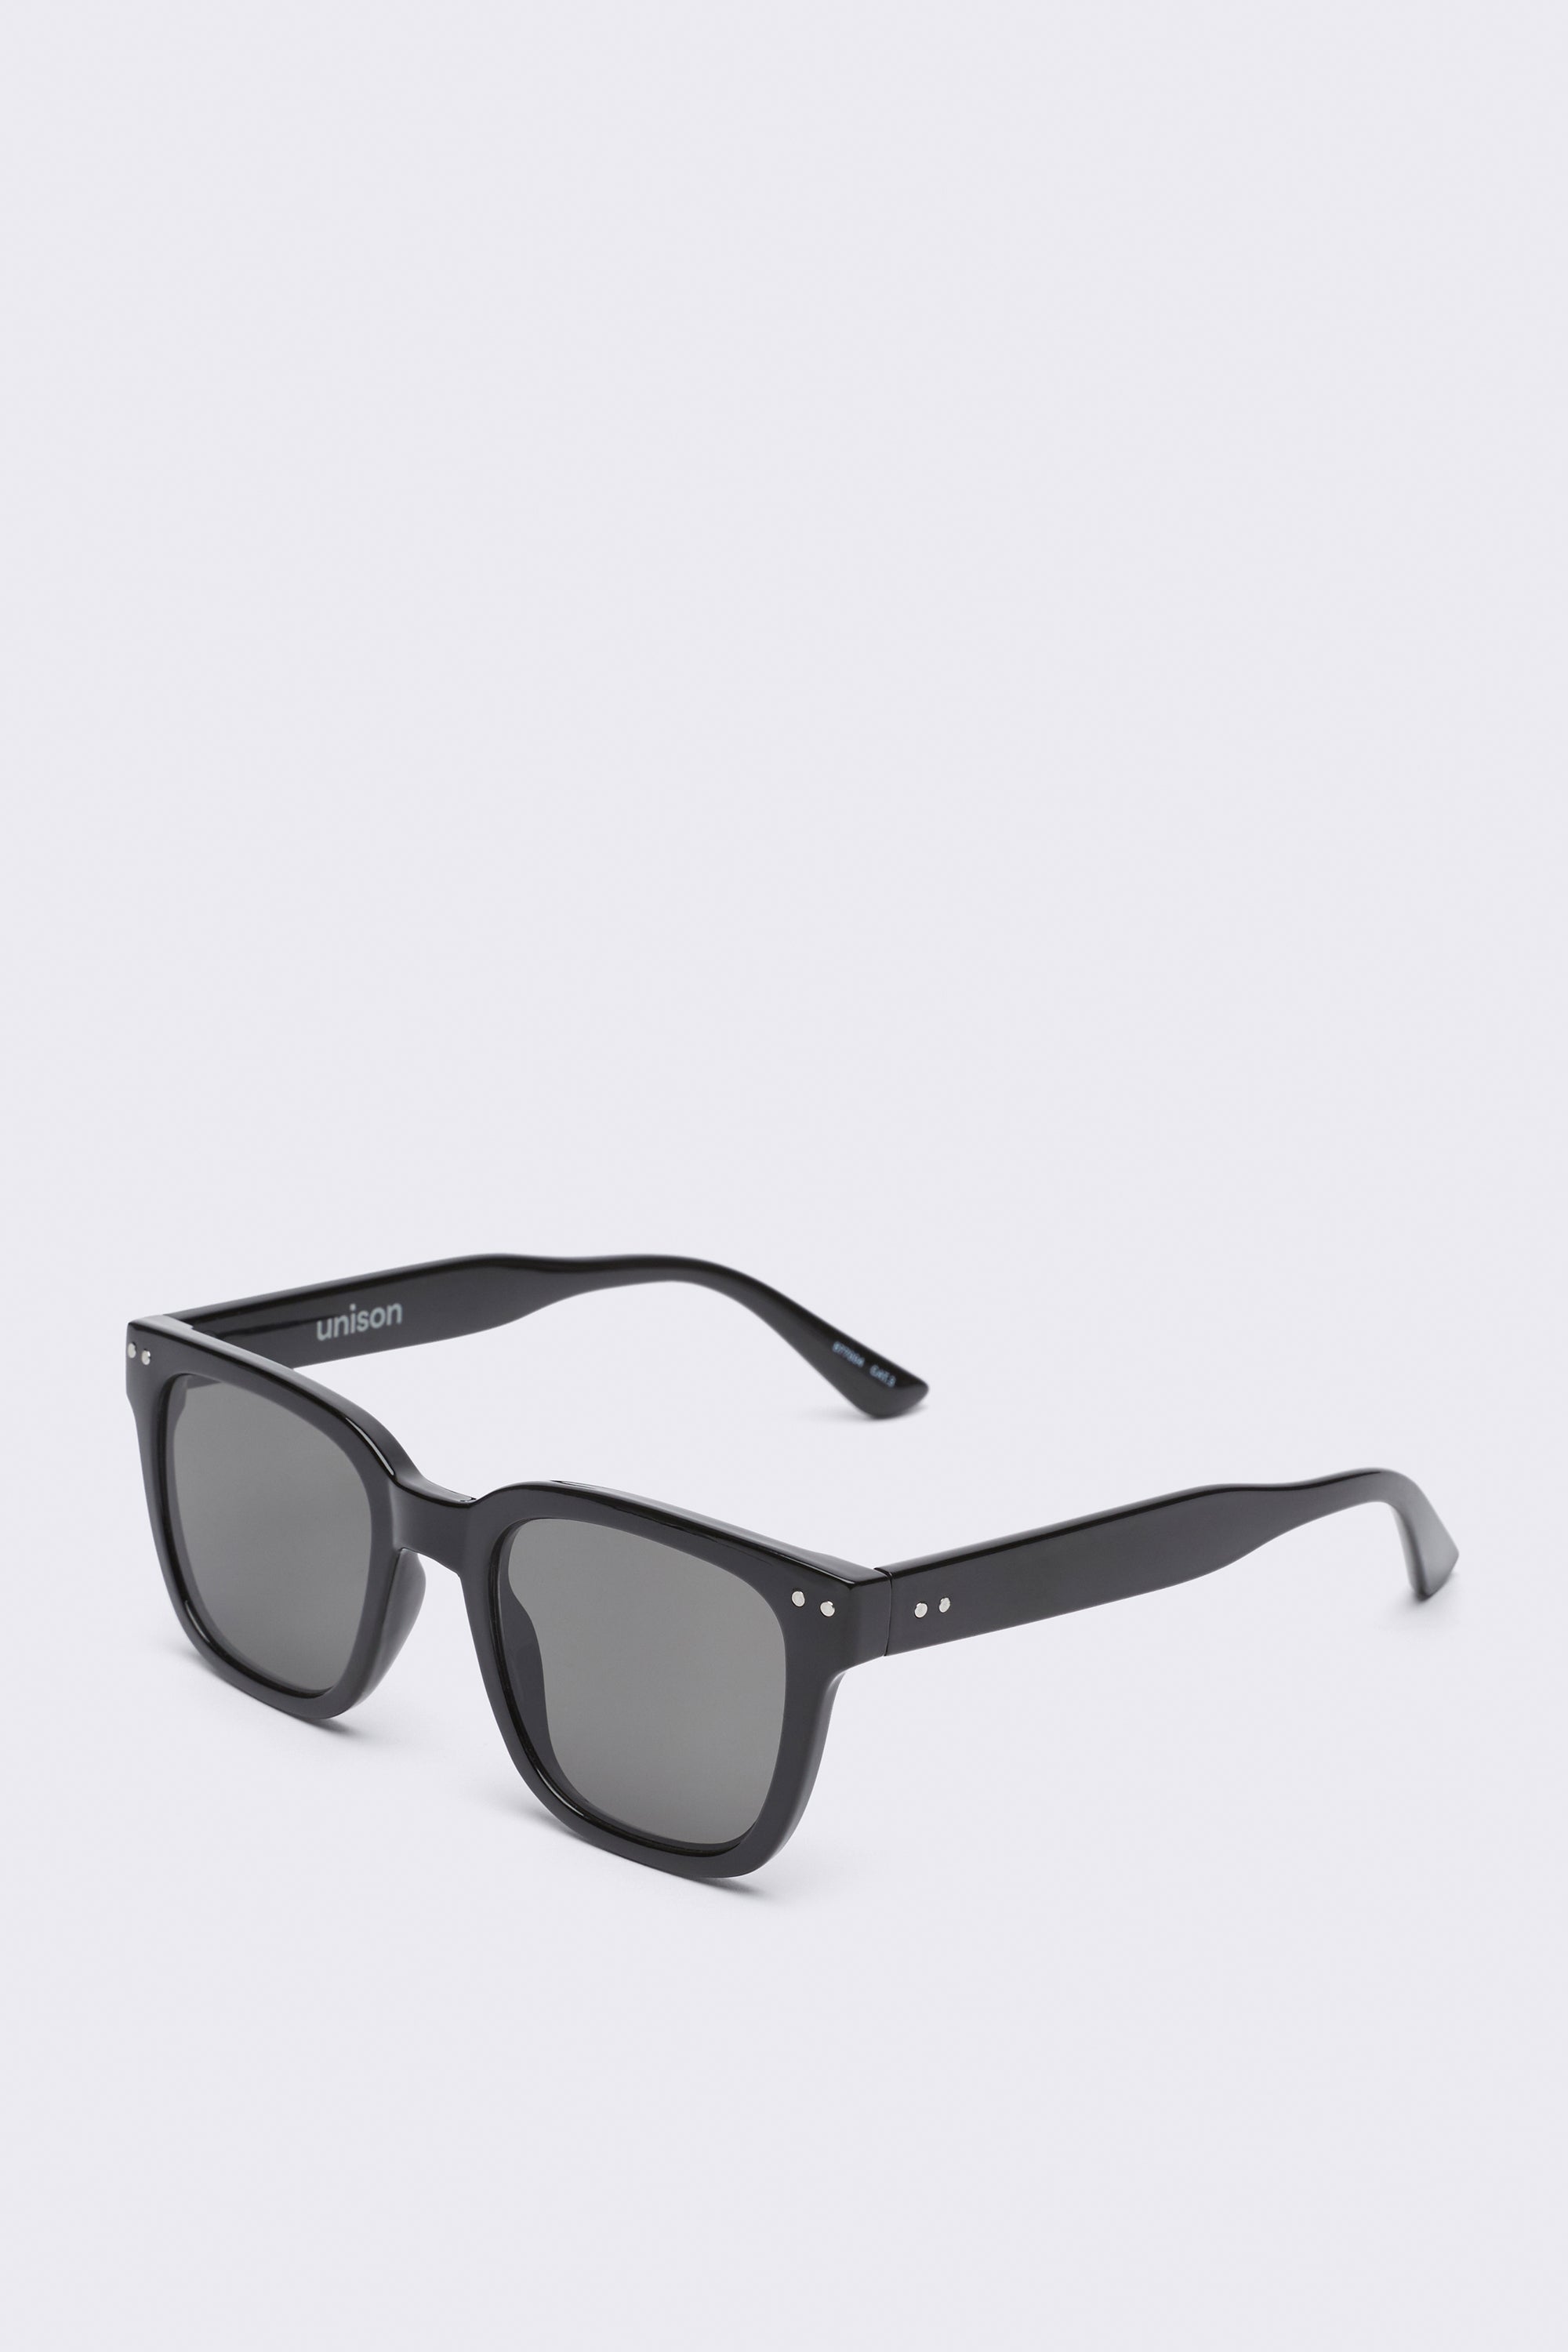 St Germain Classic Sunglasses